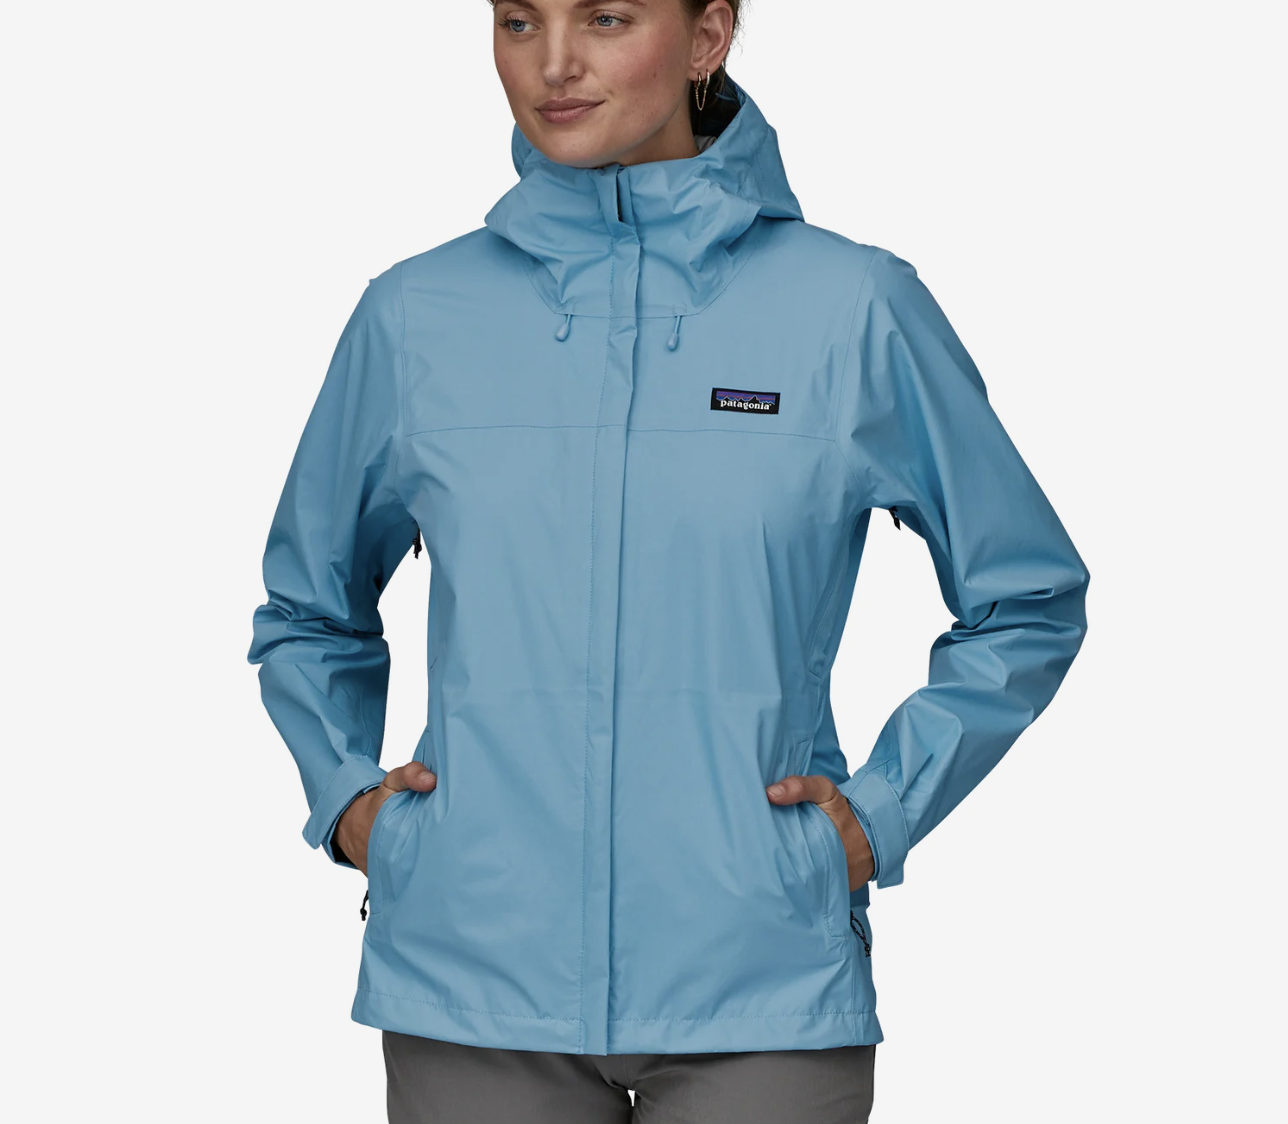 12 Best Raincoats for Women, Come Drizzle or Downpour